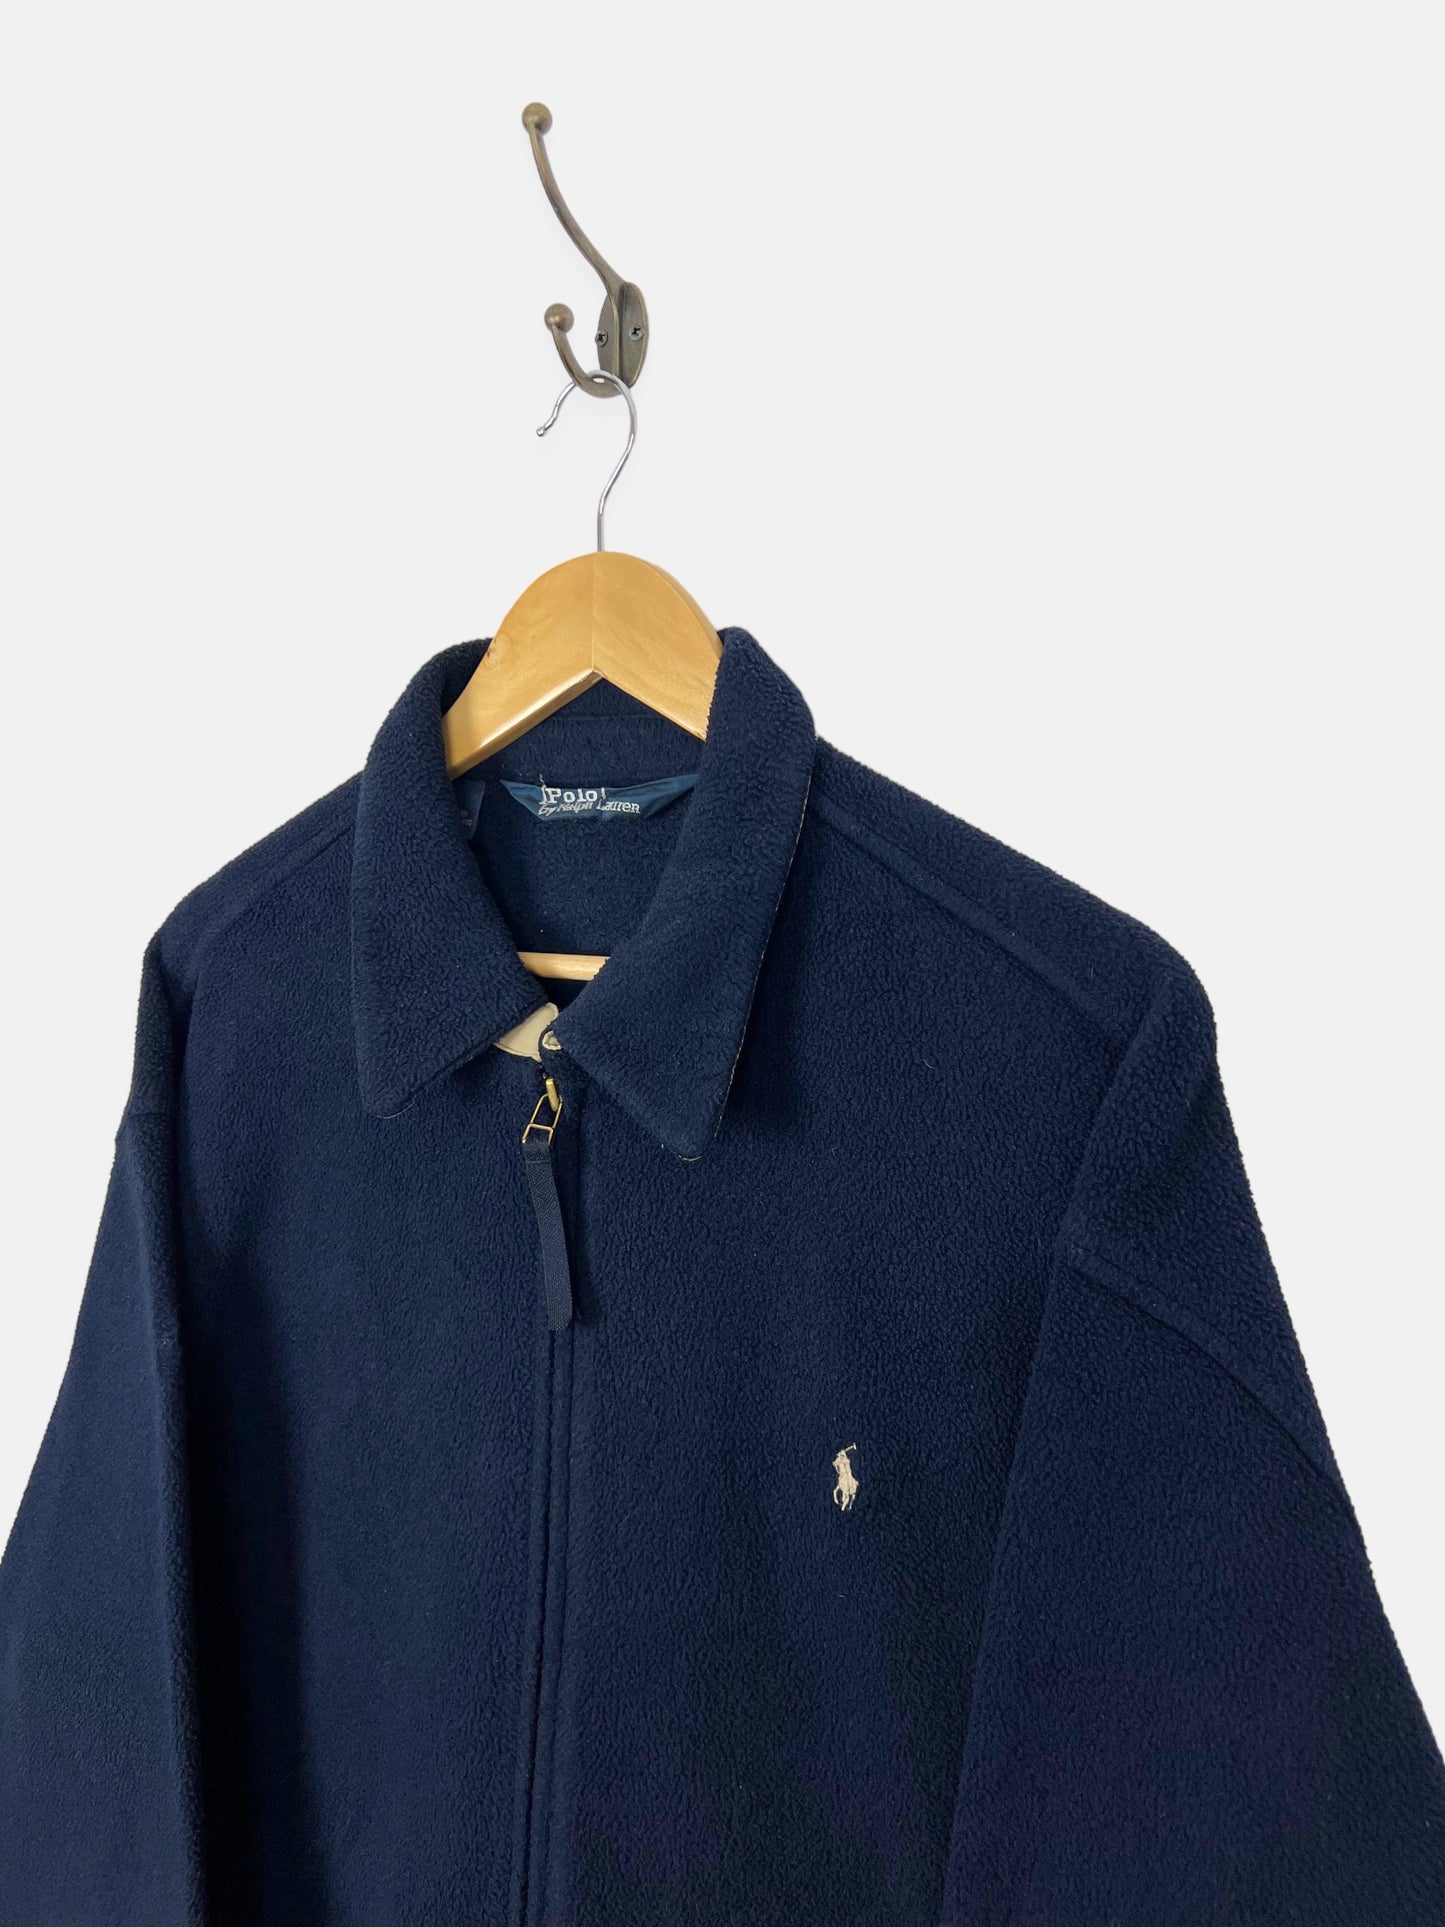 90's Ralph Lauren Embroidered Vintage Fleece/Jacket Size XL